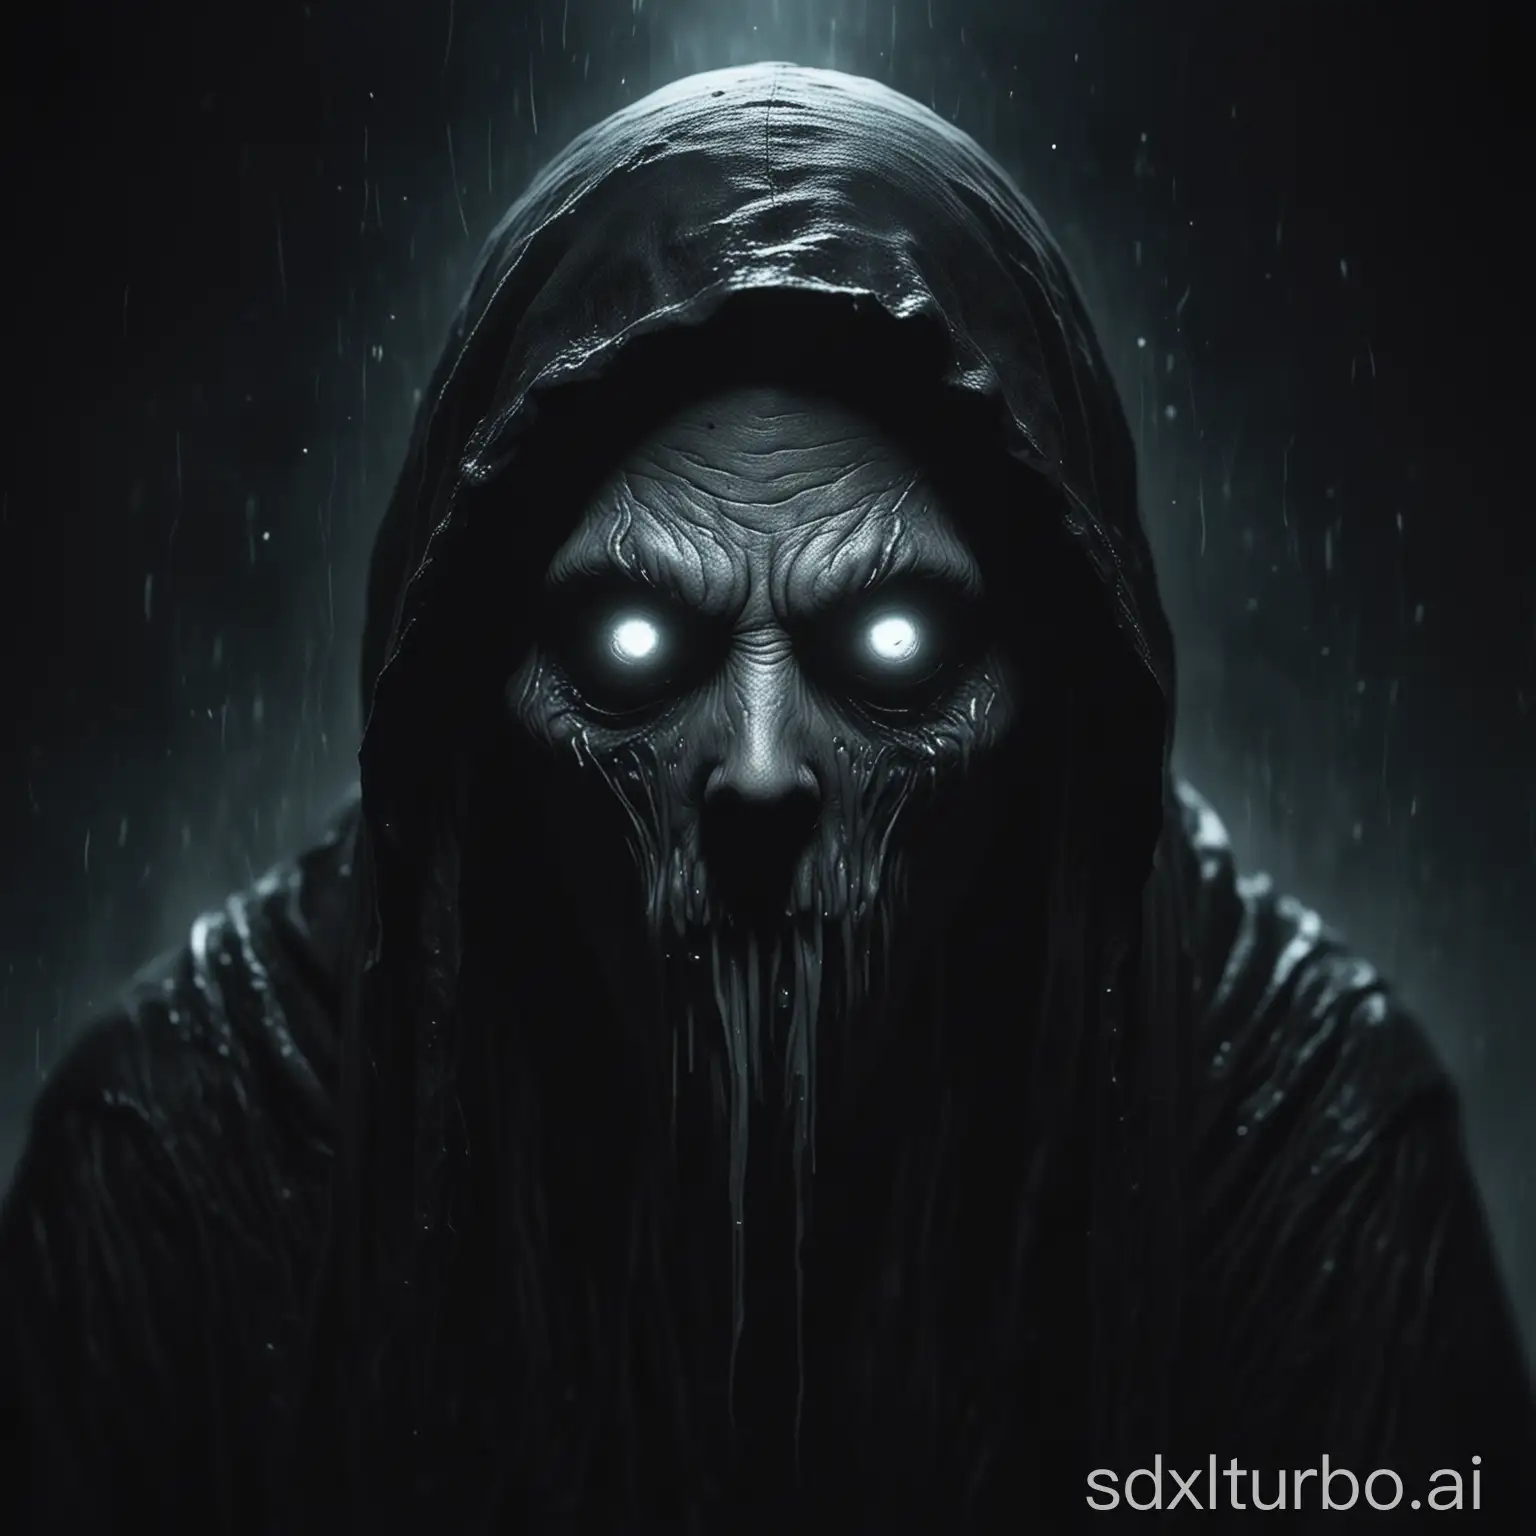 ghost face (eldritch style) (dark atmosphere)